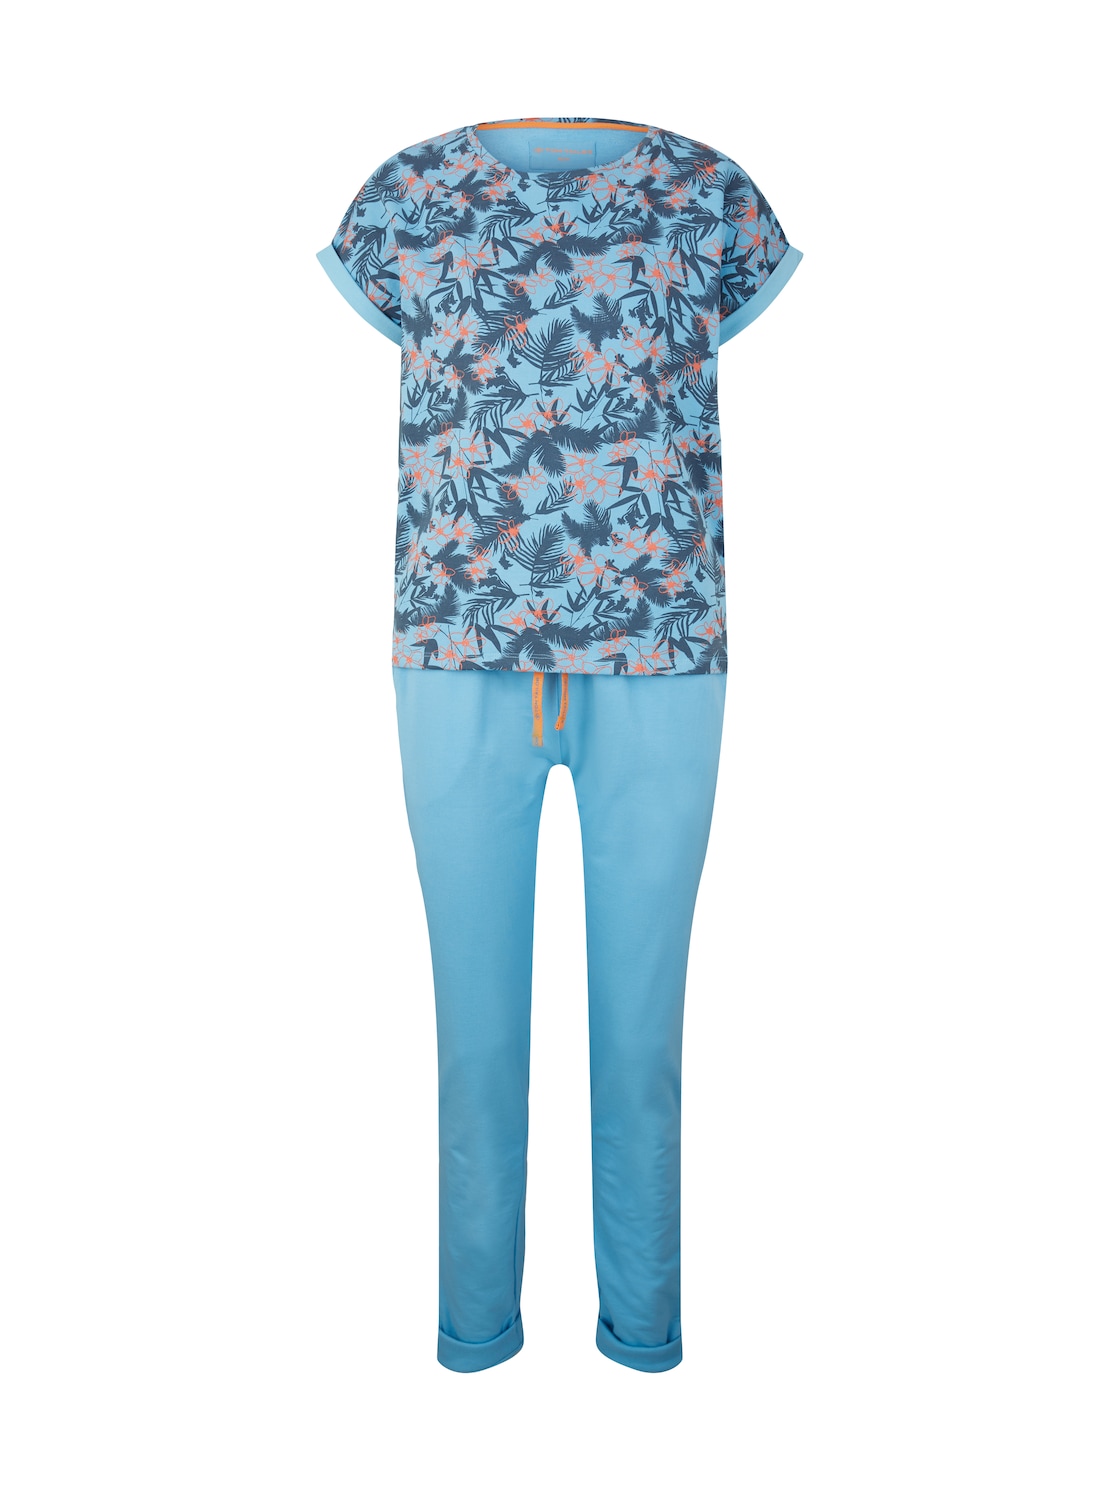 TOM TAILOR Damen Pyjama Set mit gemustertem Oberteil, blau, Muster, Gr. 46 von Tom Tailor